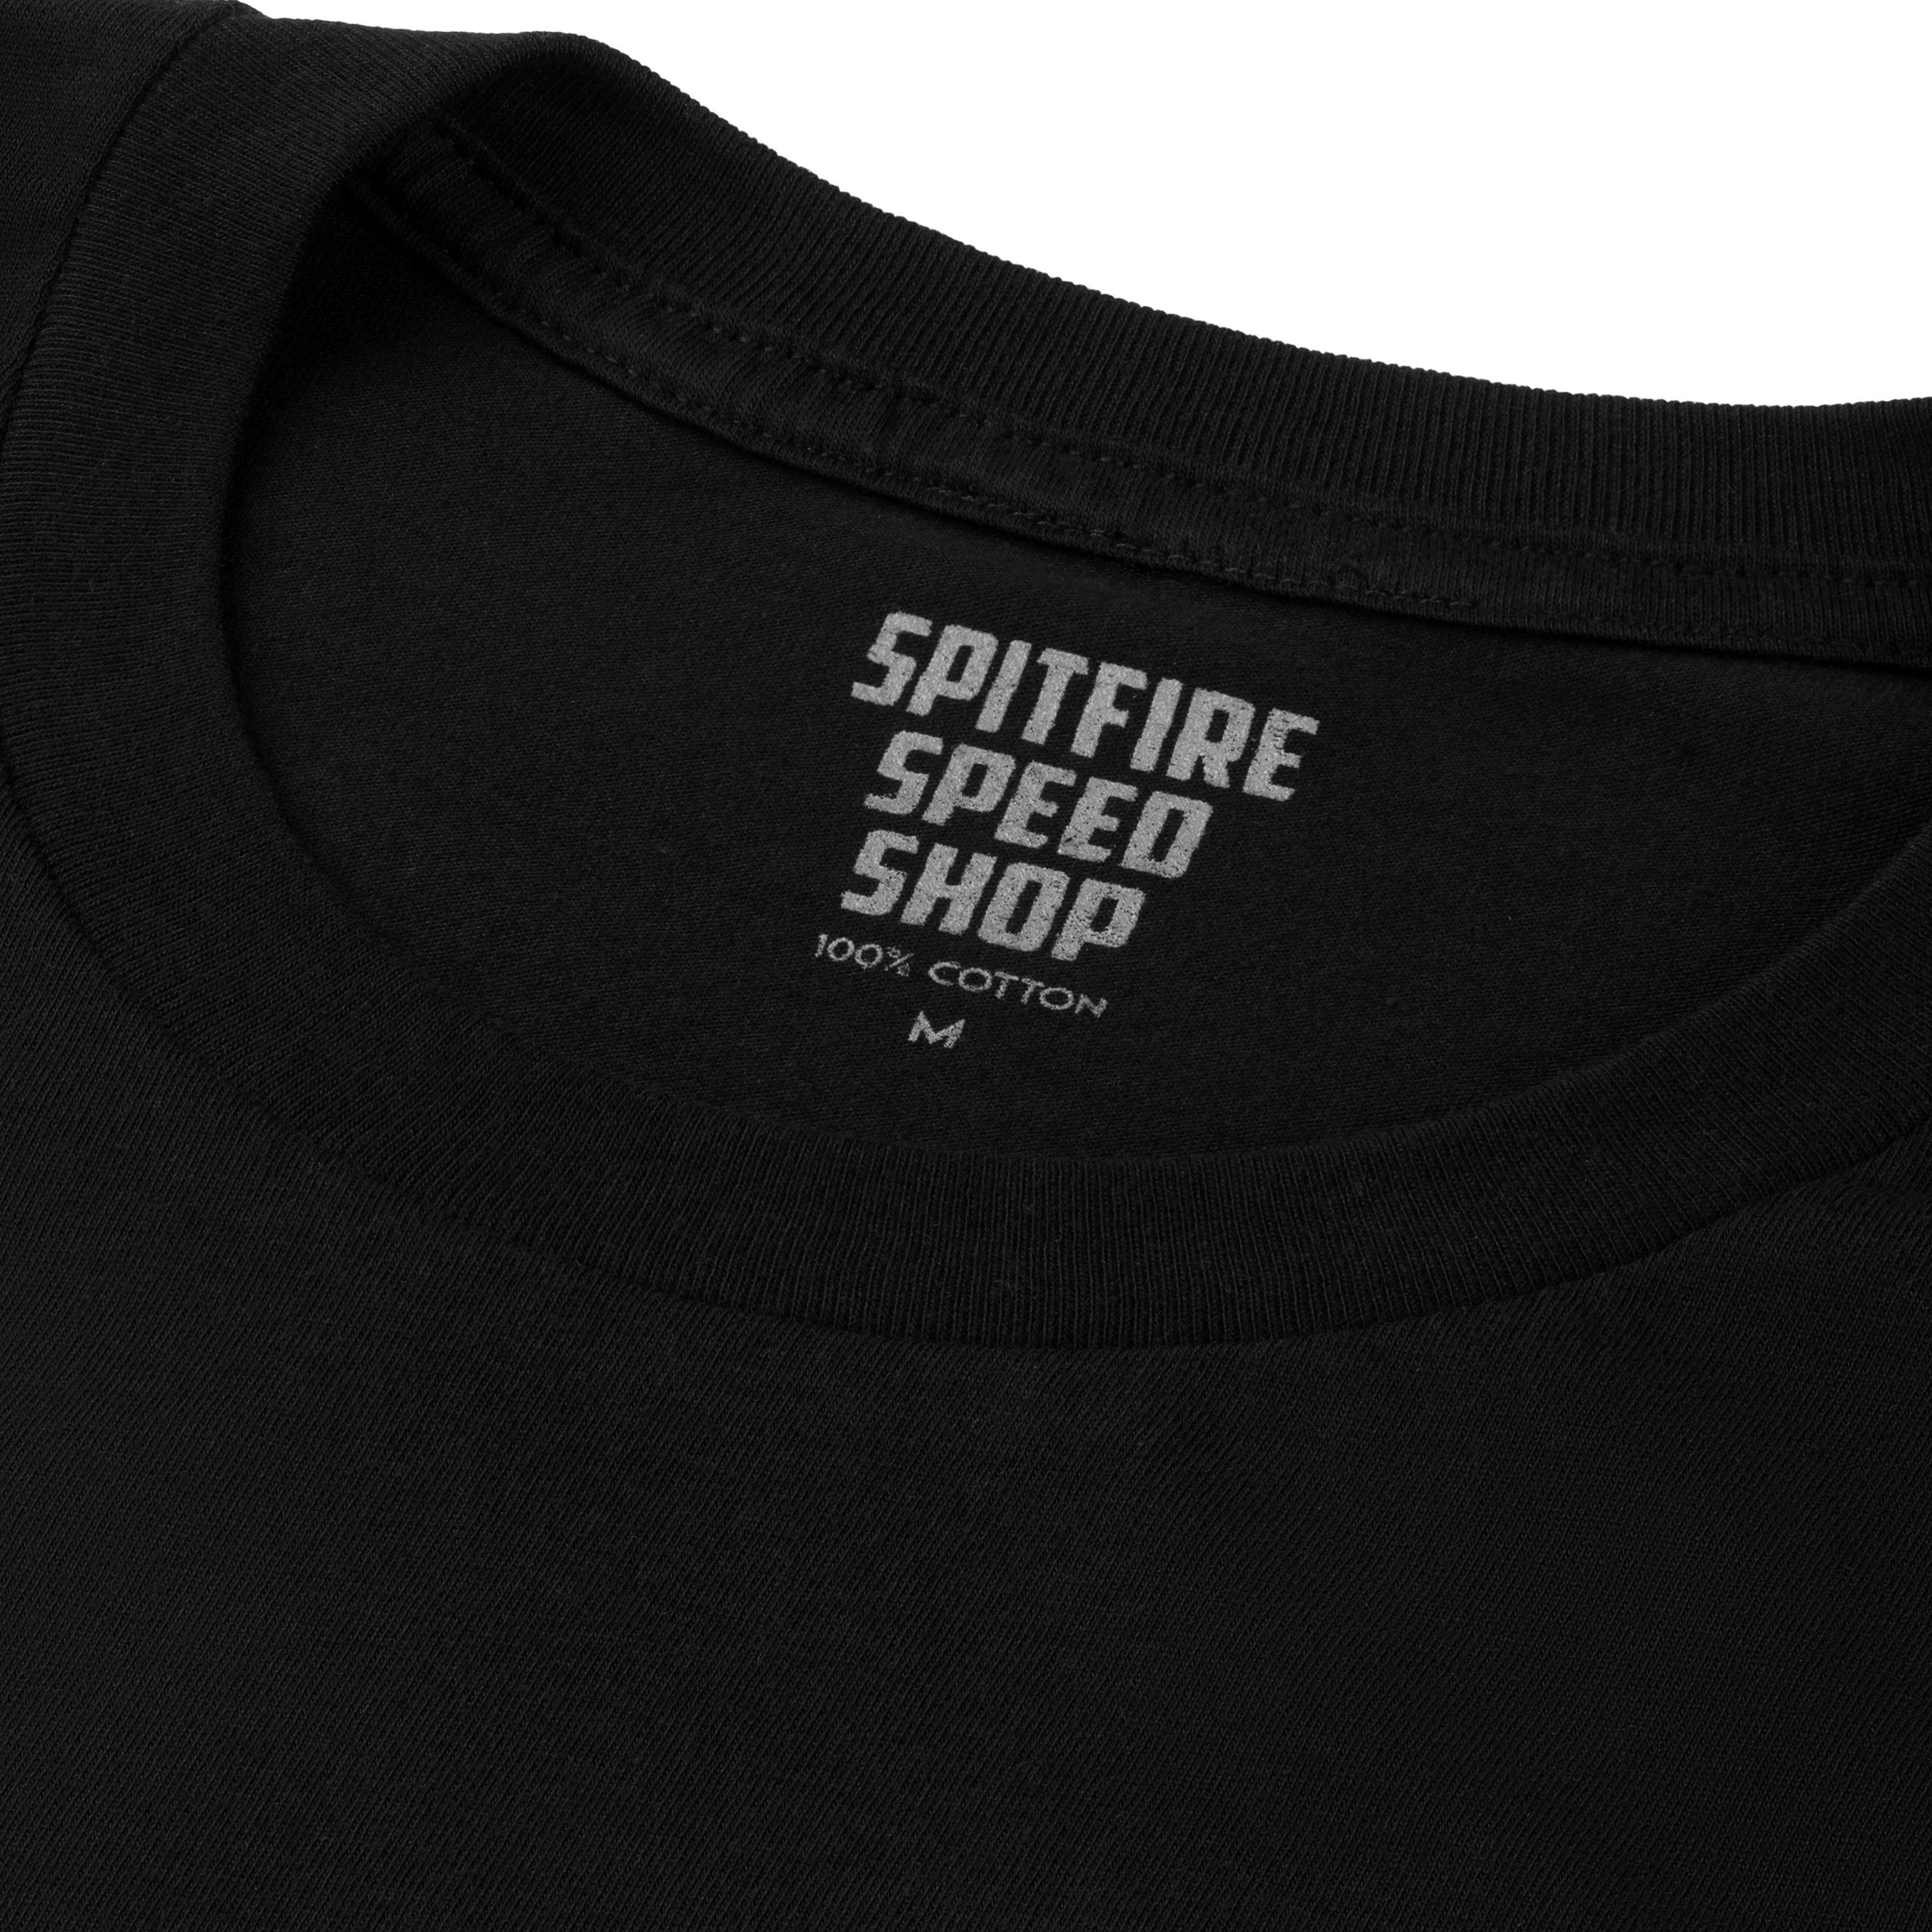 Spitfire T-Shirt Black With Bomber Girl Logo